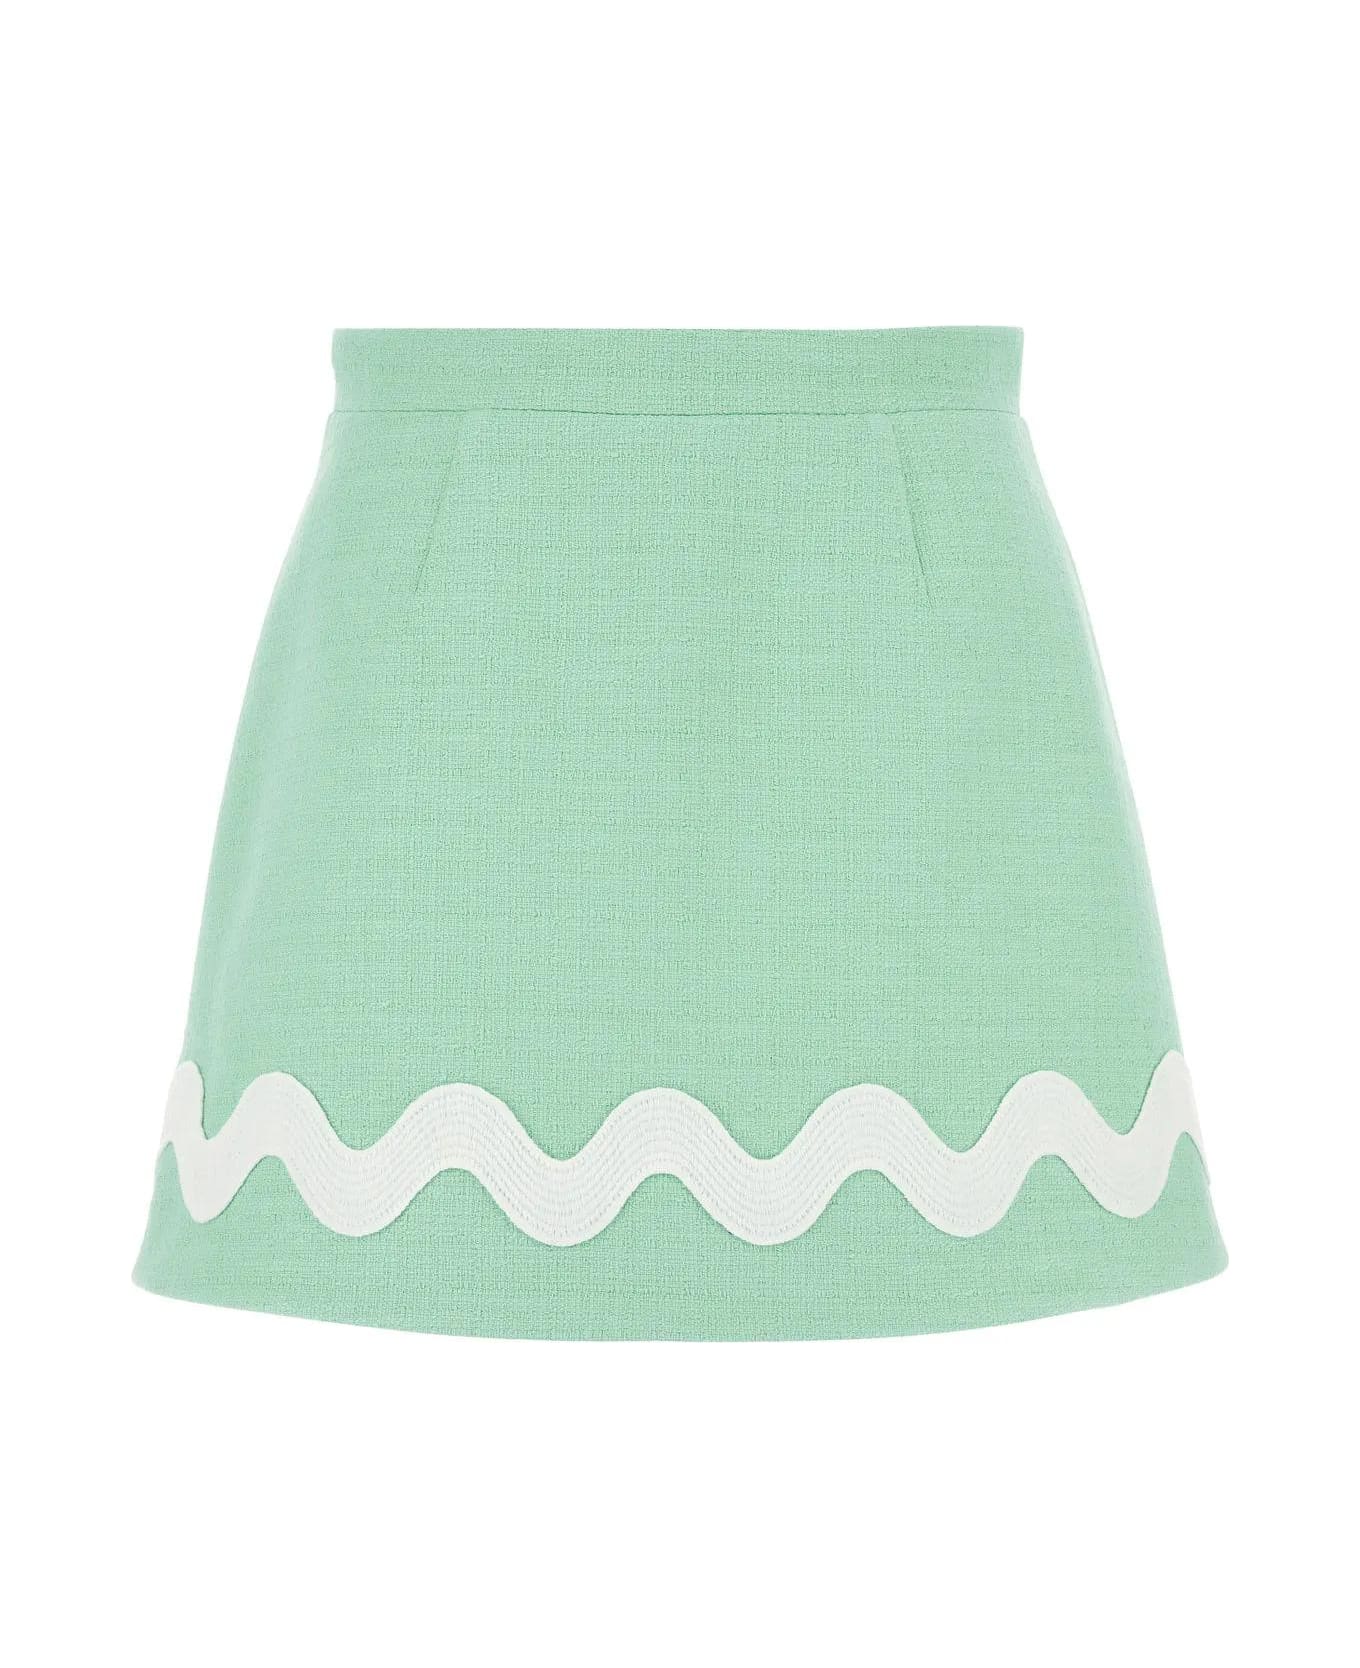 Patou Sea Green Tweed Mini Skirt - Mint green